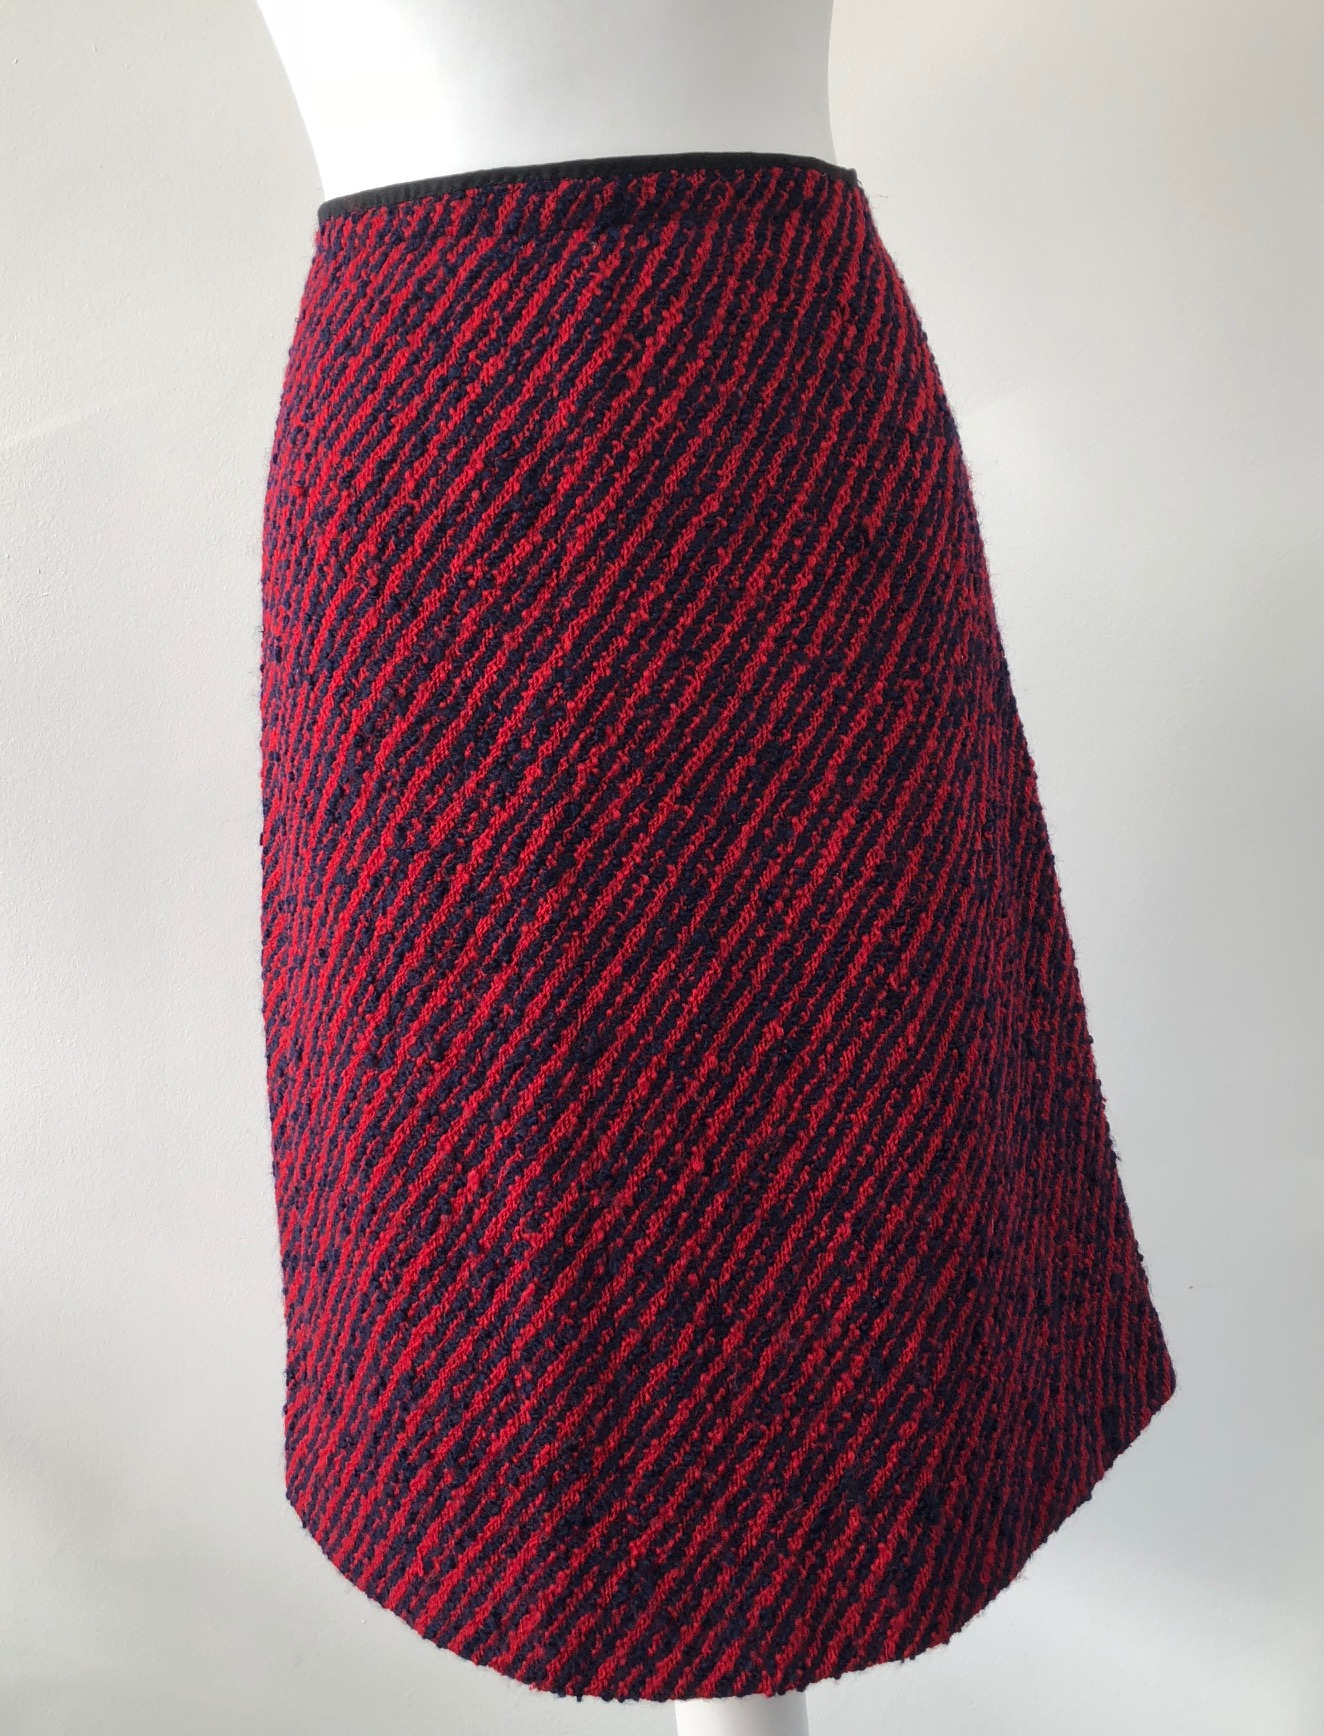 CHANEL Tweed Pencil Skirt Vintage Red Midnight blue